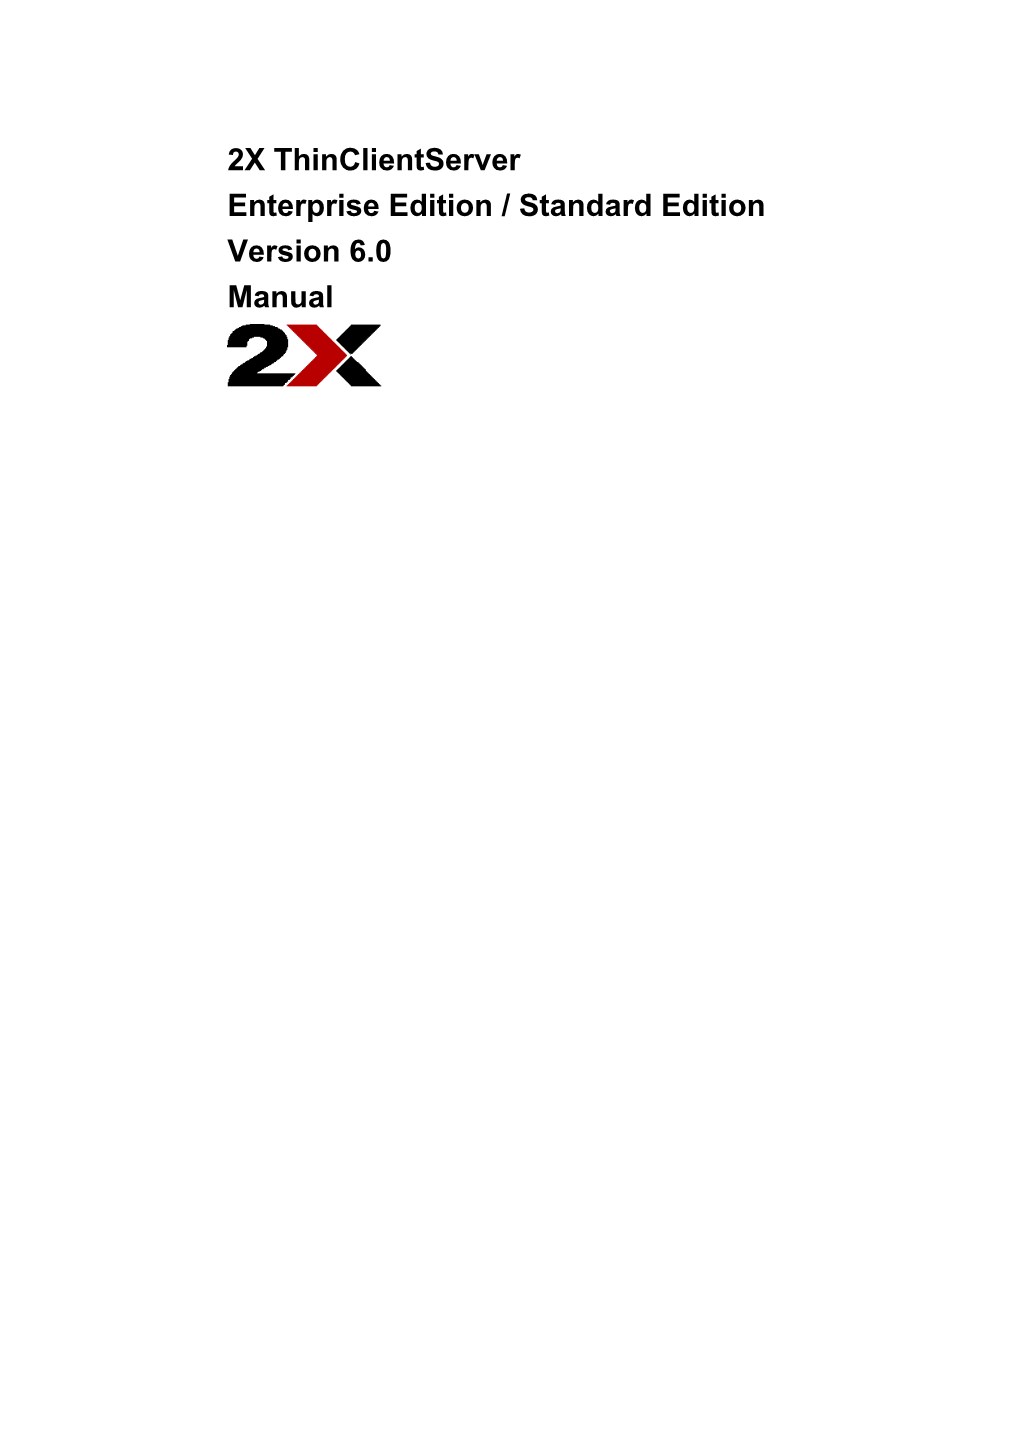 2X Thinclientserver Enterprise Edition / Standard Edition Version 6.0 Manual